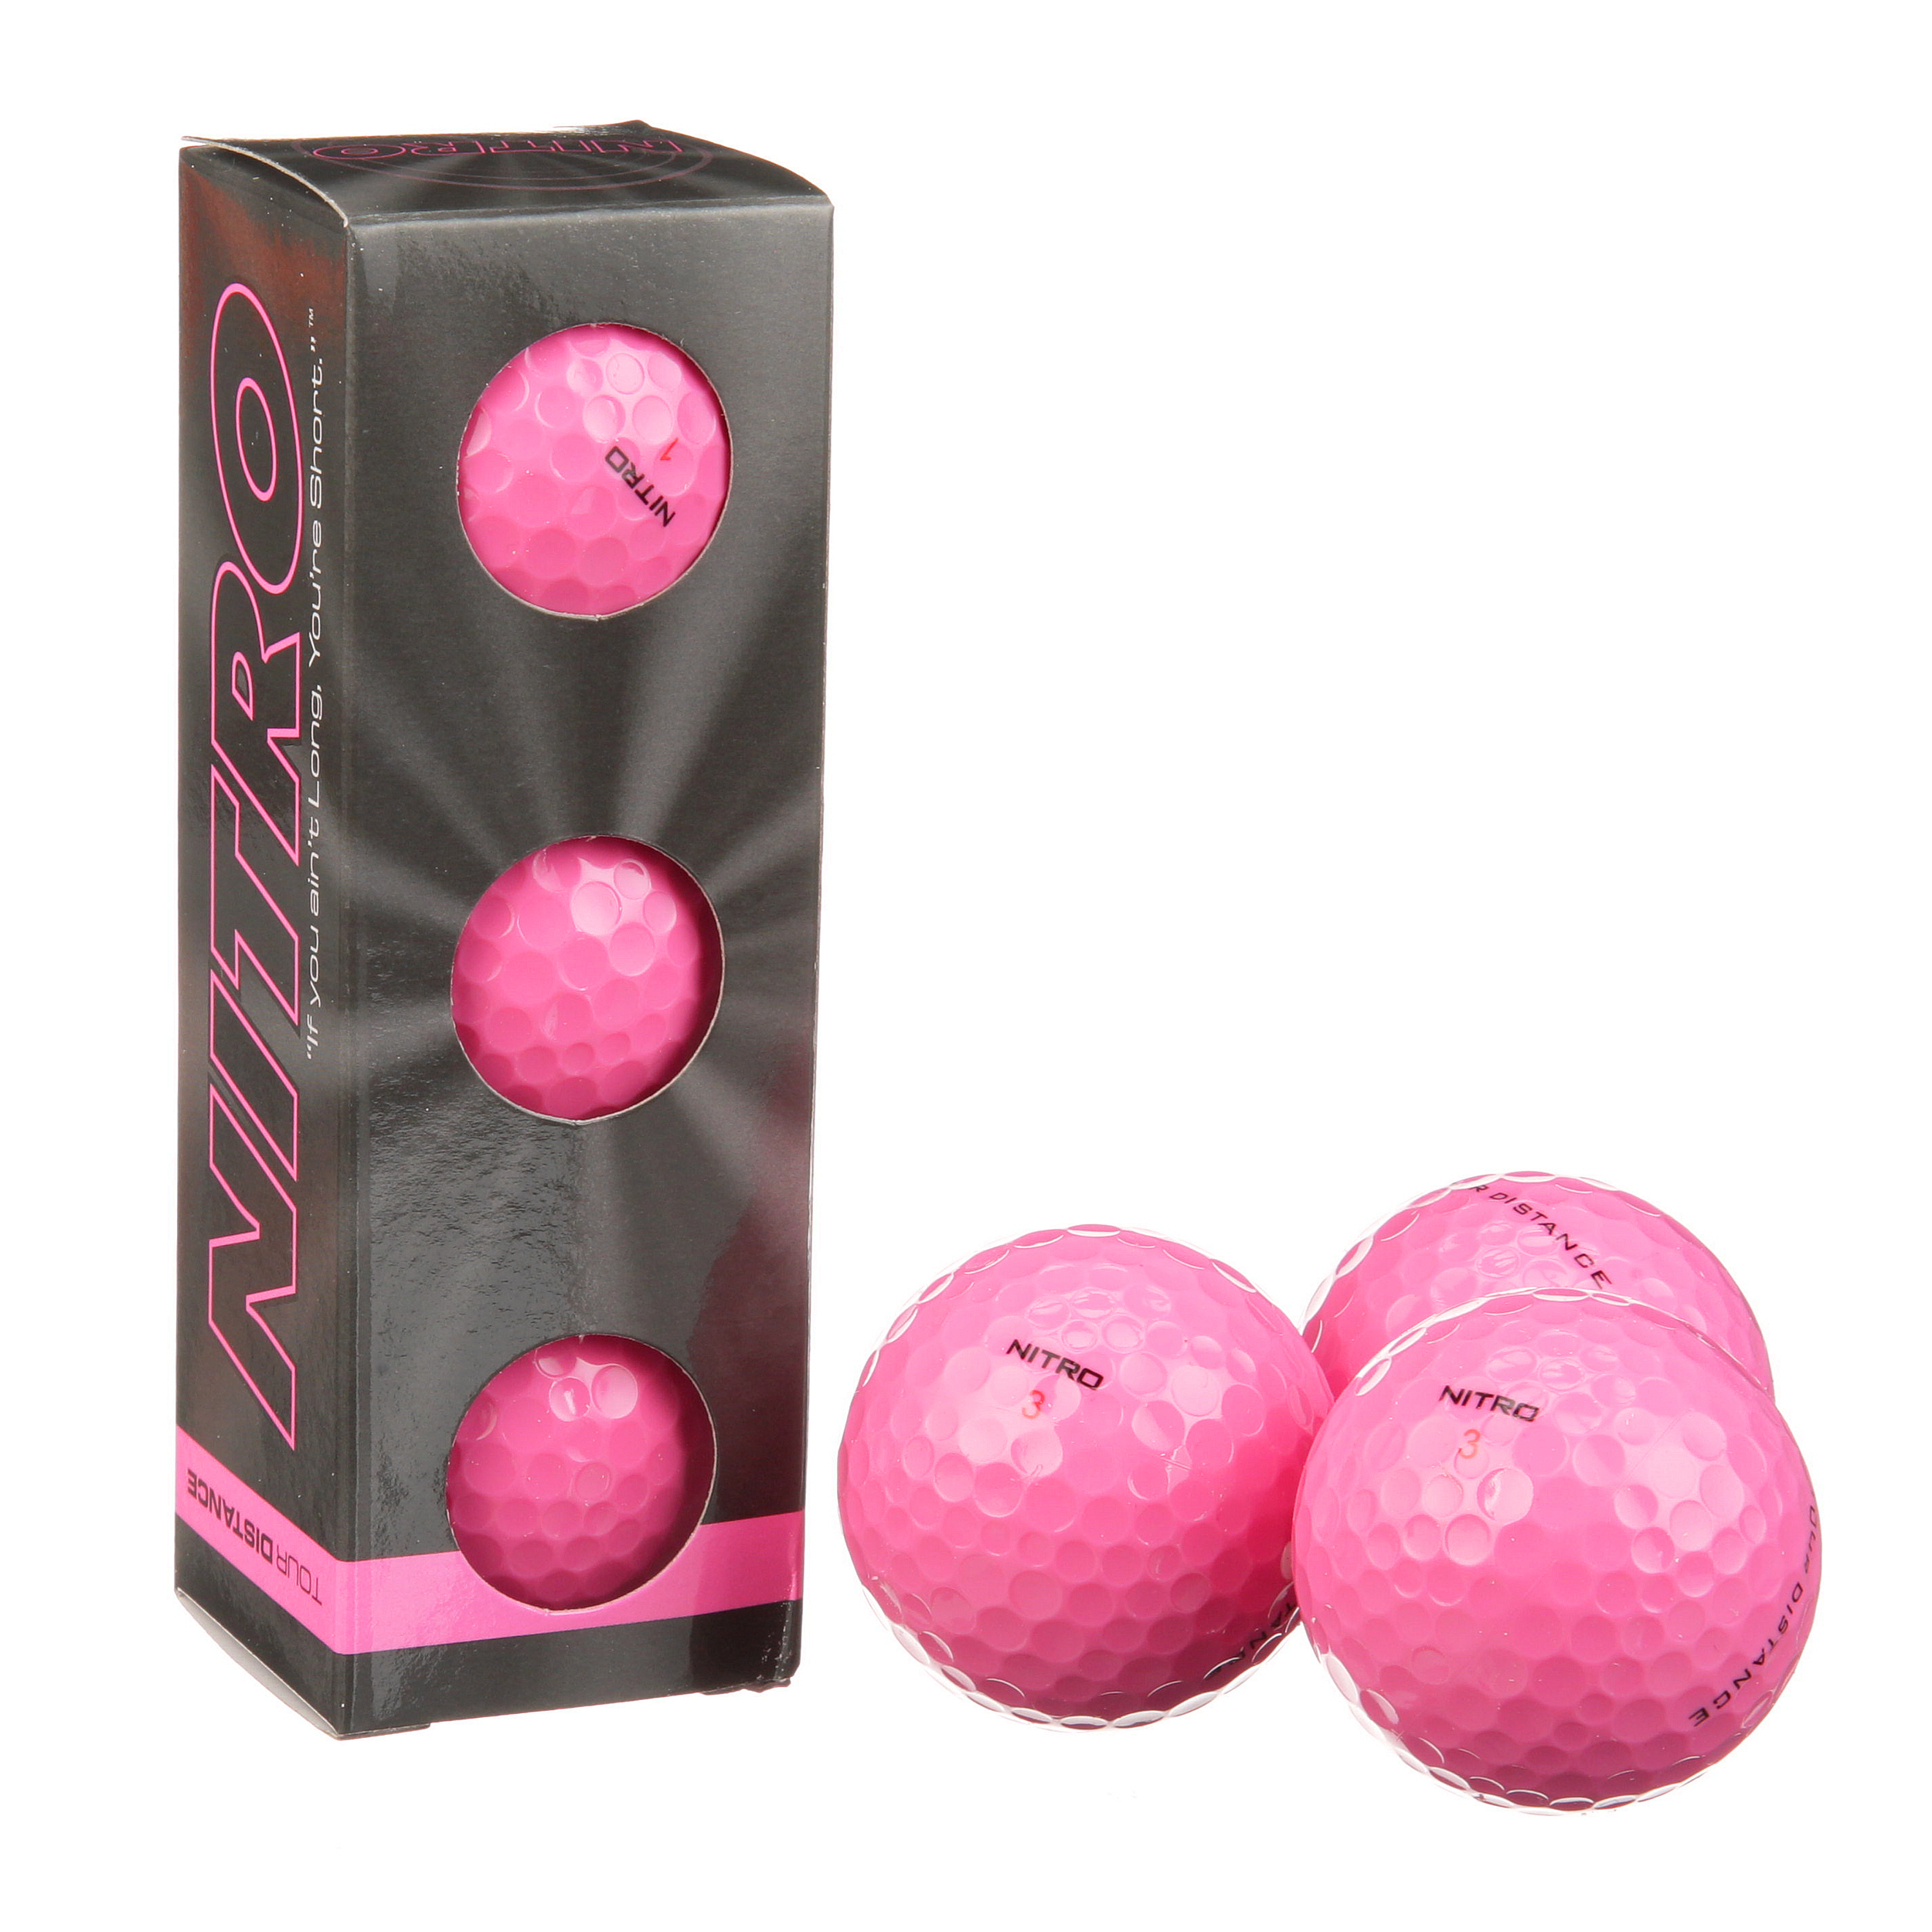 Nitro Golf Tour Distance Golf Balls, Pink, 12 Pack - image 5 of 5